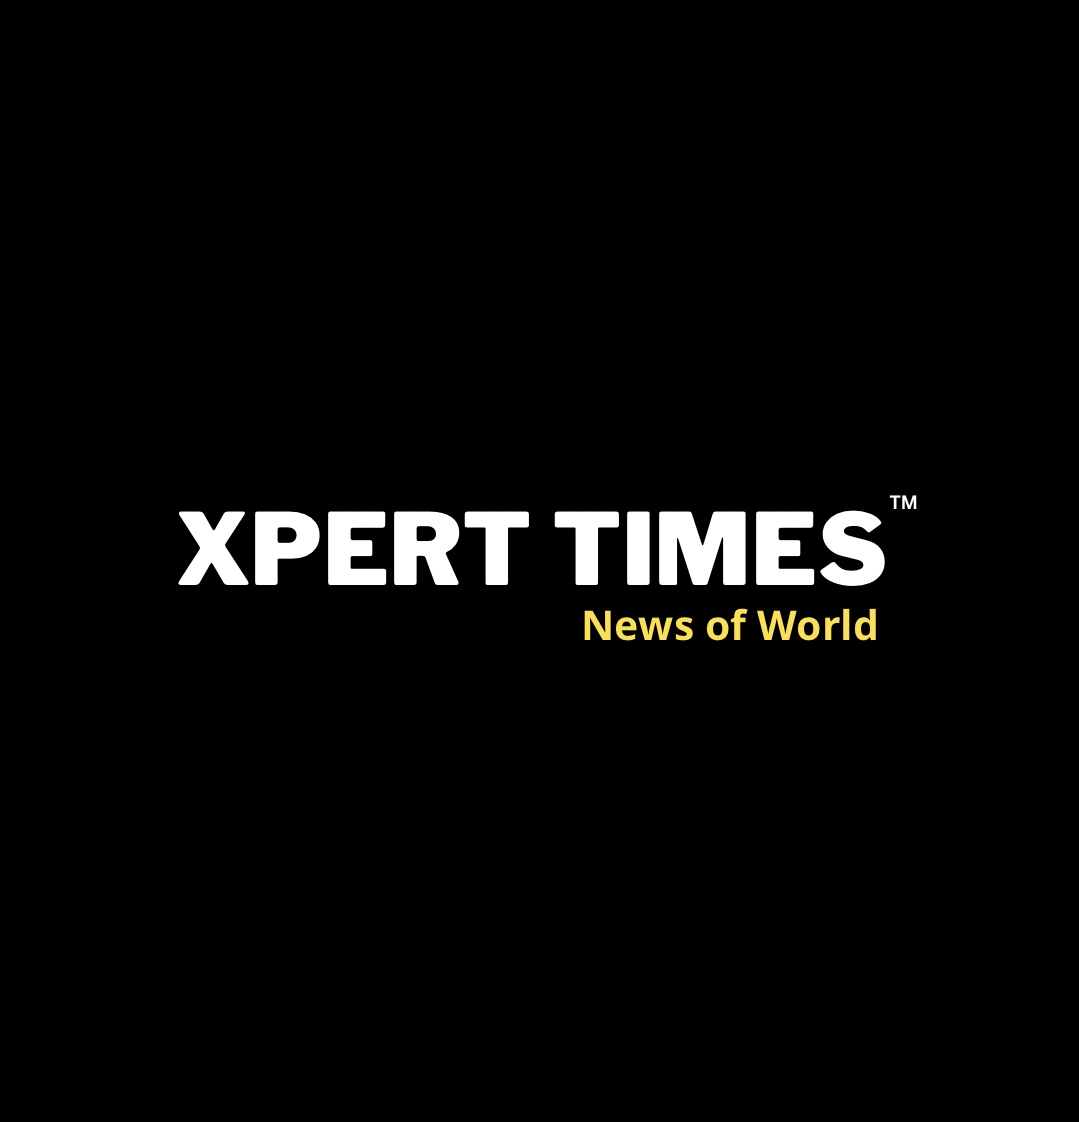 Xpert Times